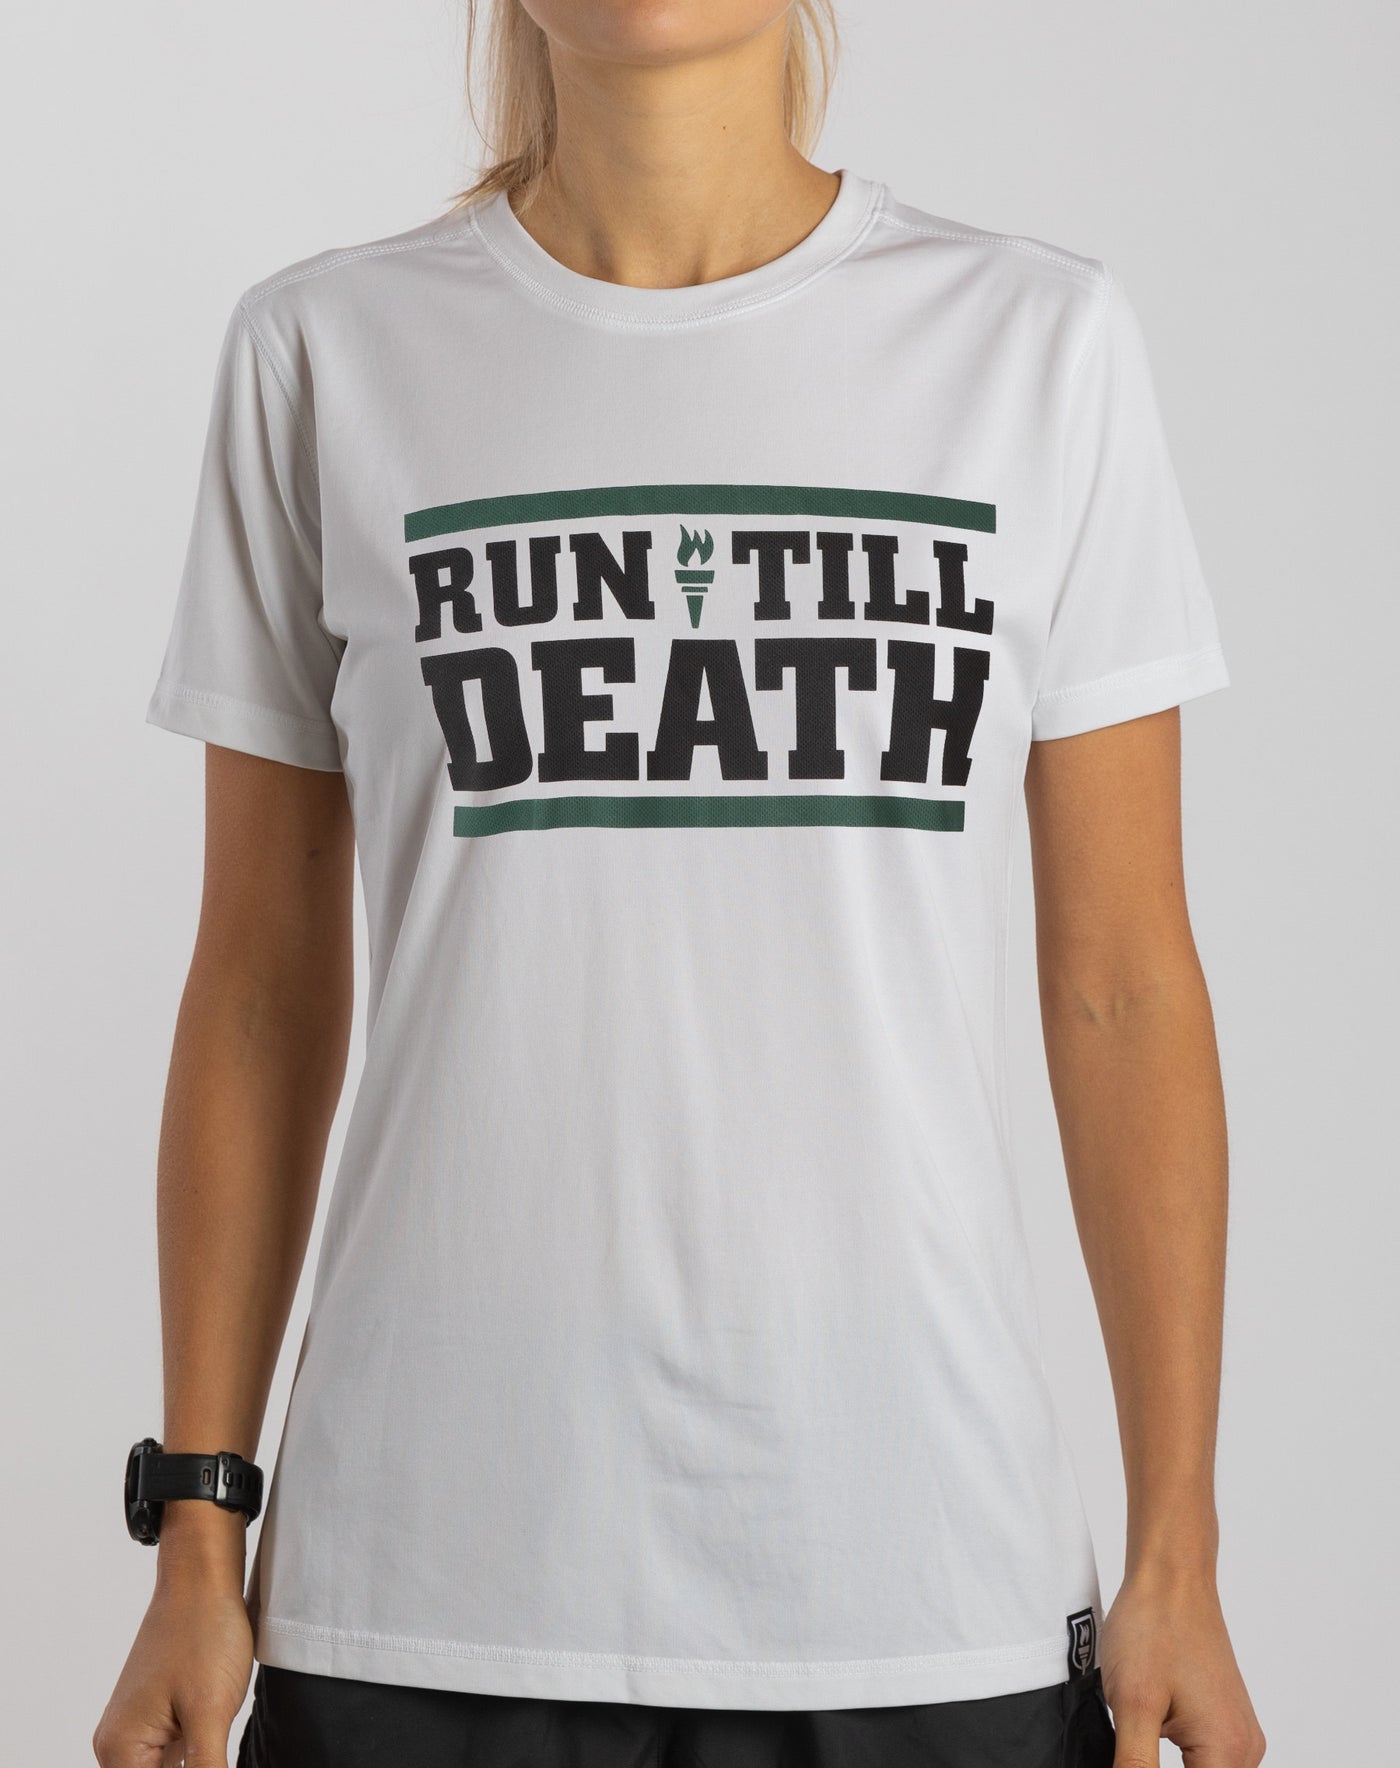 "Run Till Death" Prime Racing Shirt (Female)